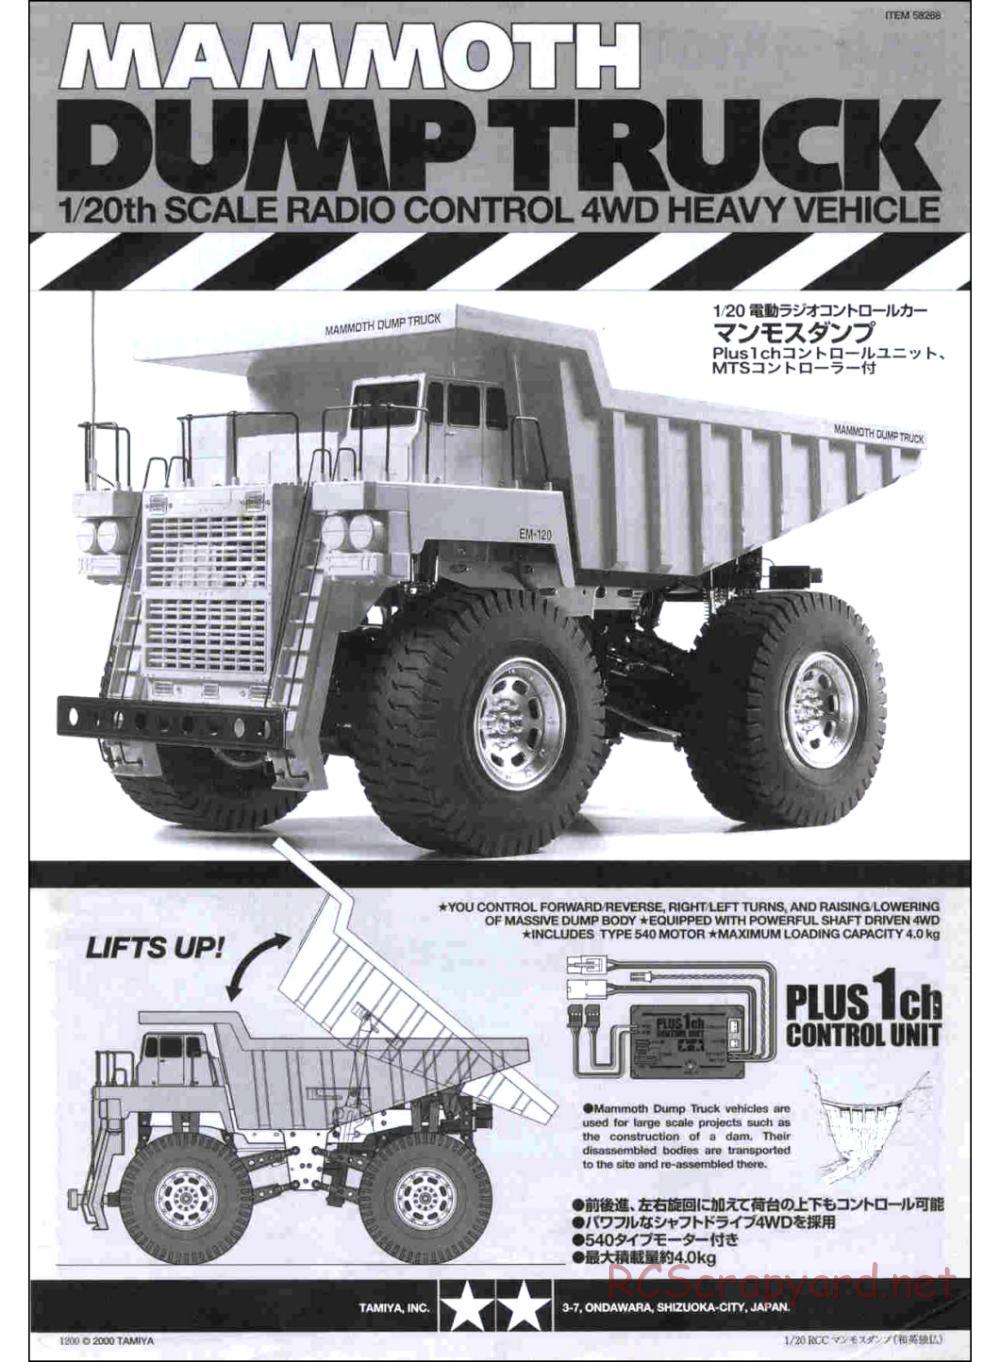 Tamiya - Mammoth Dump Truck Chassis - Manual - Page 1